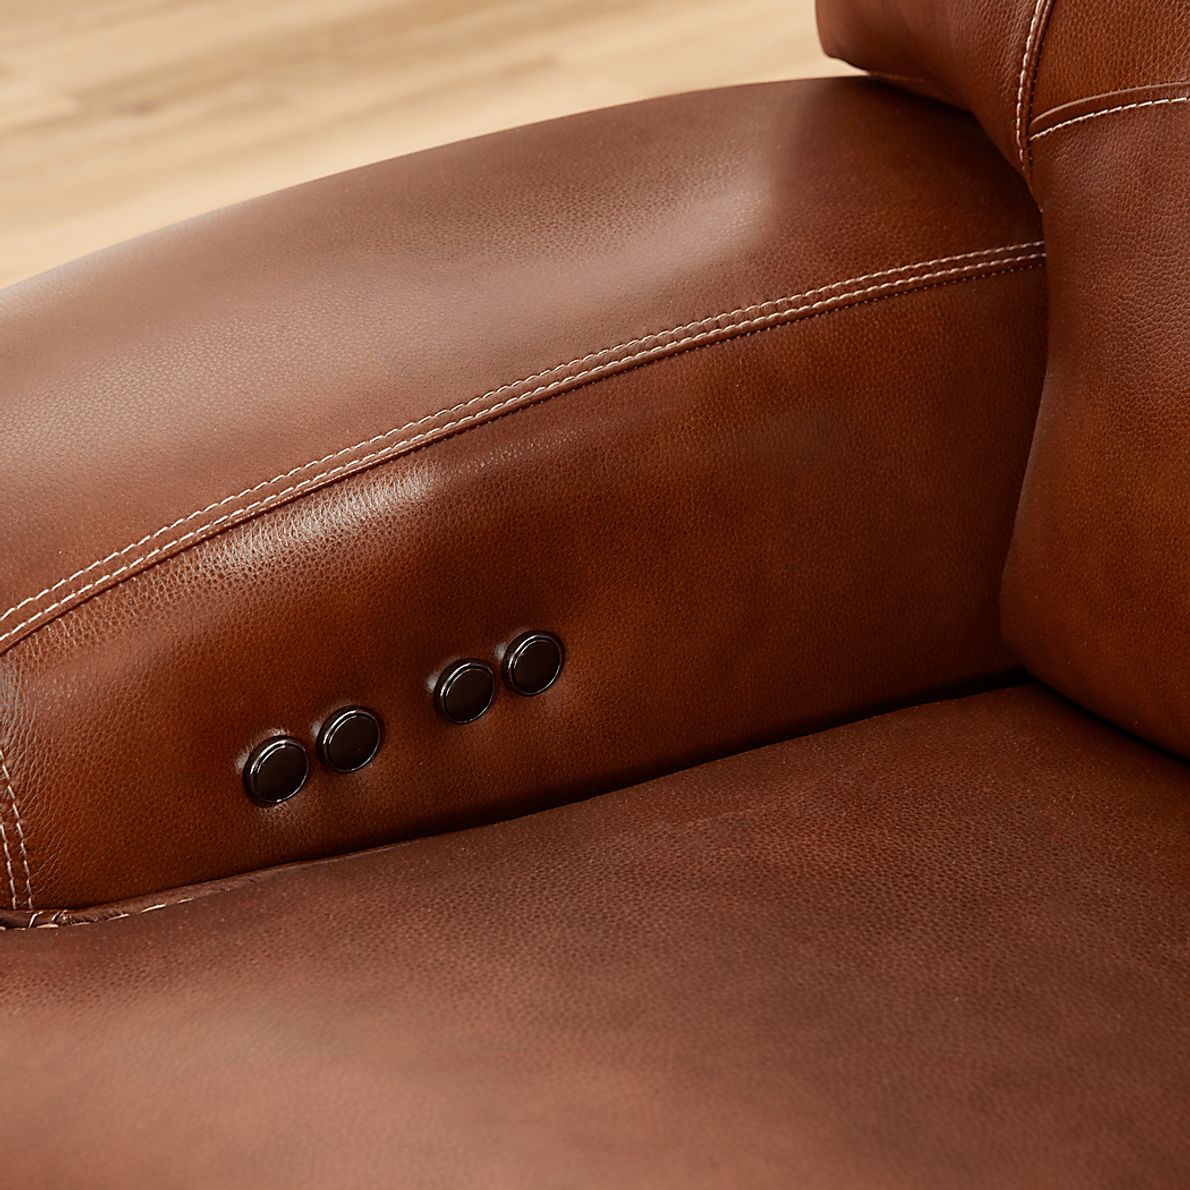 Farona 5 Pc Leather Dual Power Reclining Living Room Set